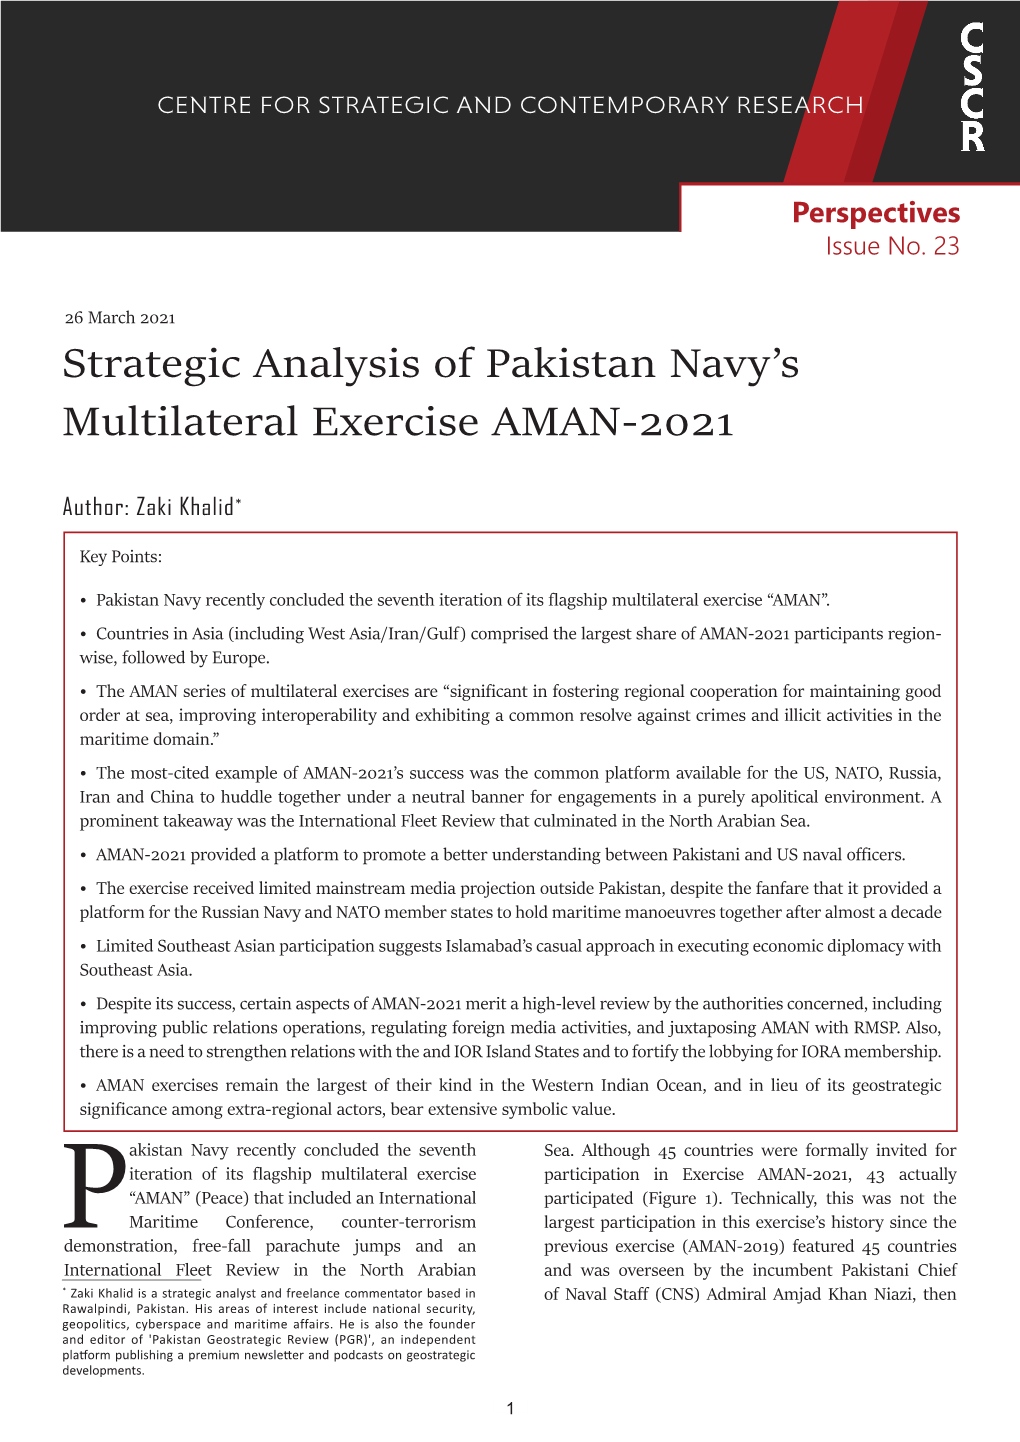 Strategic Analysis of Pakistan Navy's Multilateral Exercise AMAN-2021